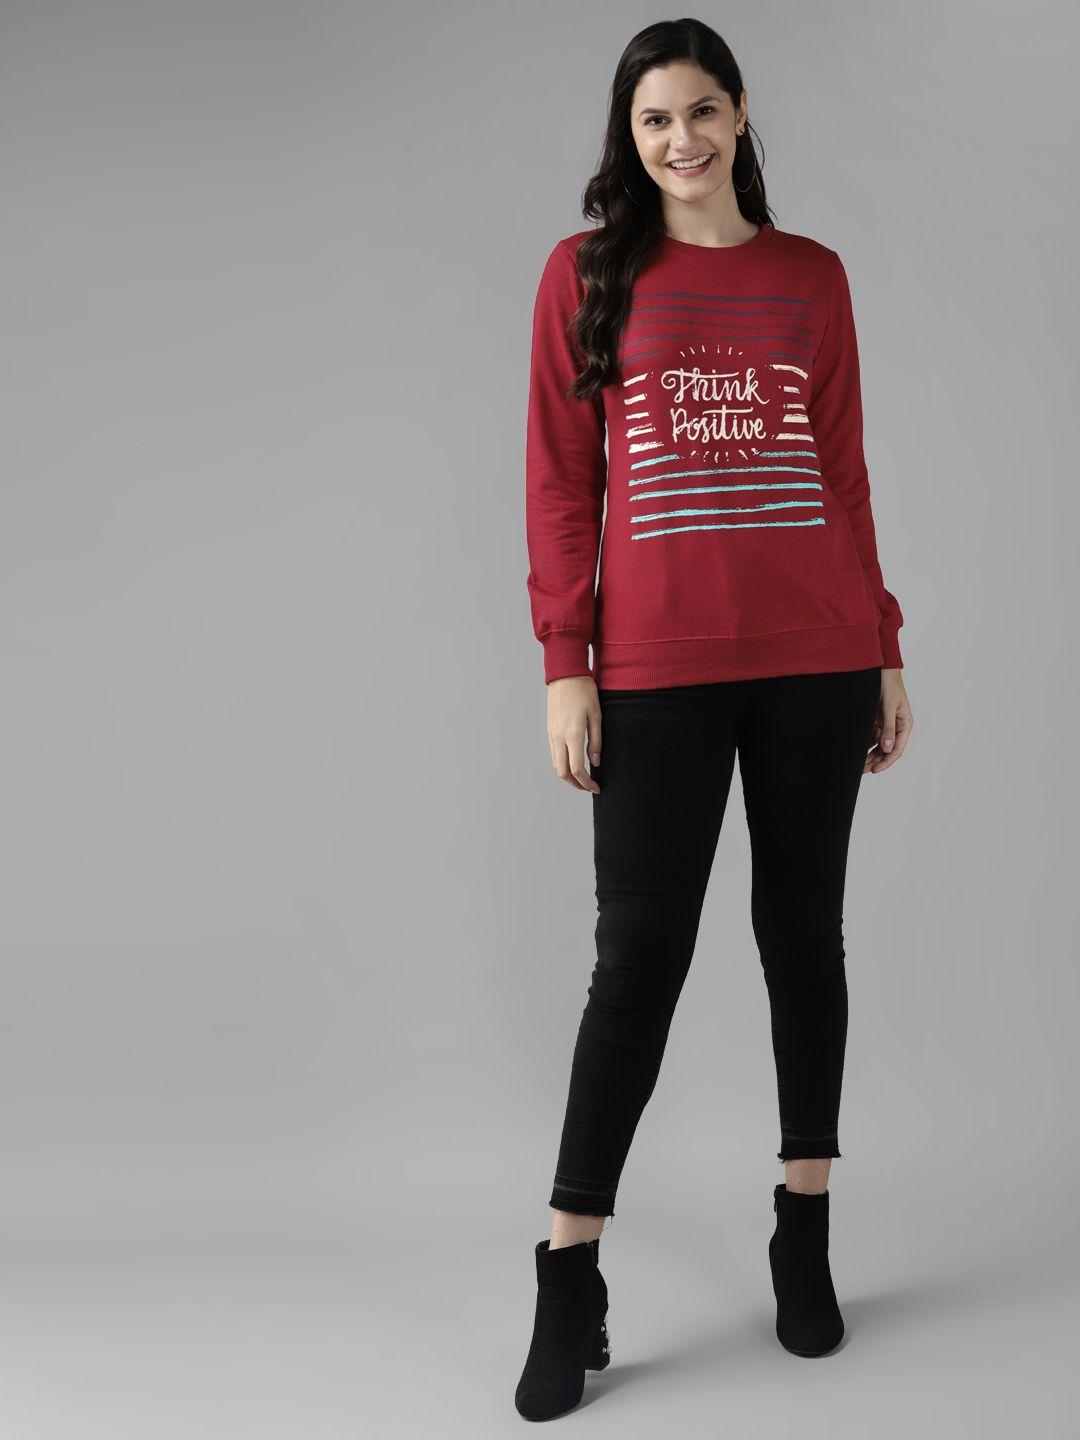 cayman-women-maroon-printed-sweatshirt